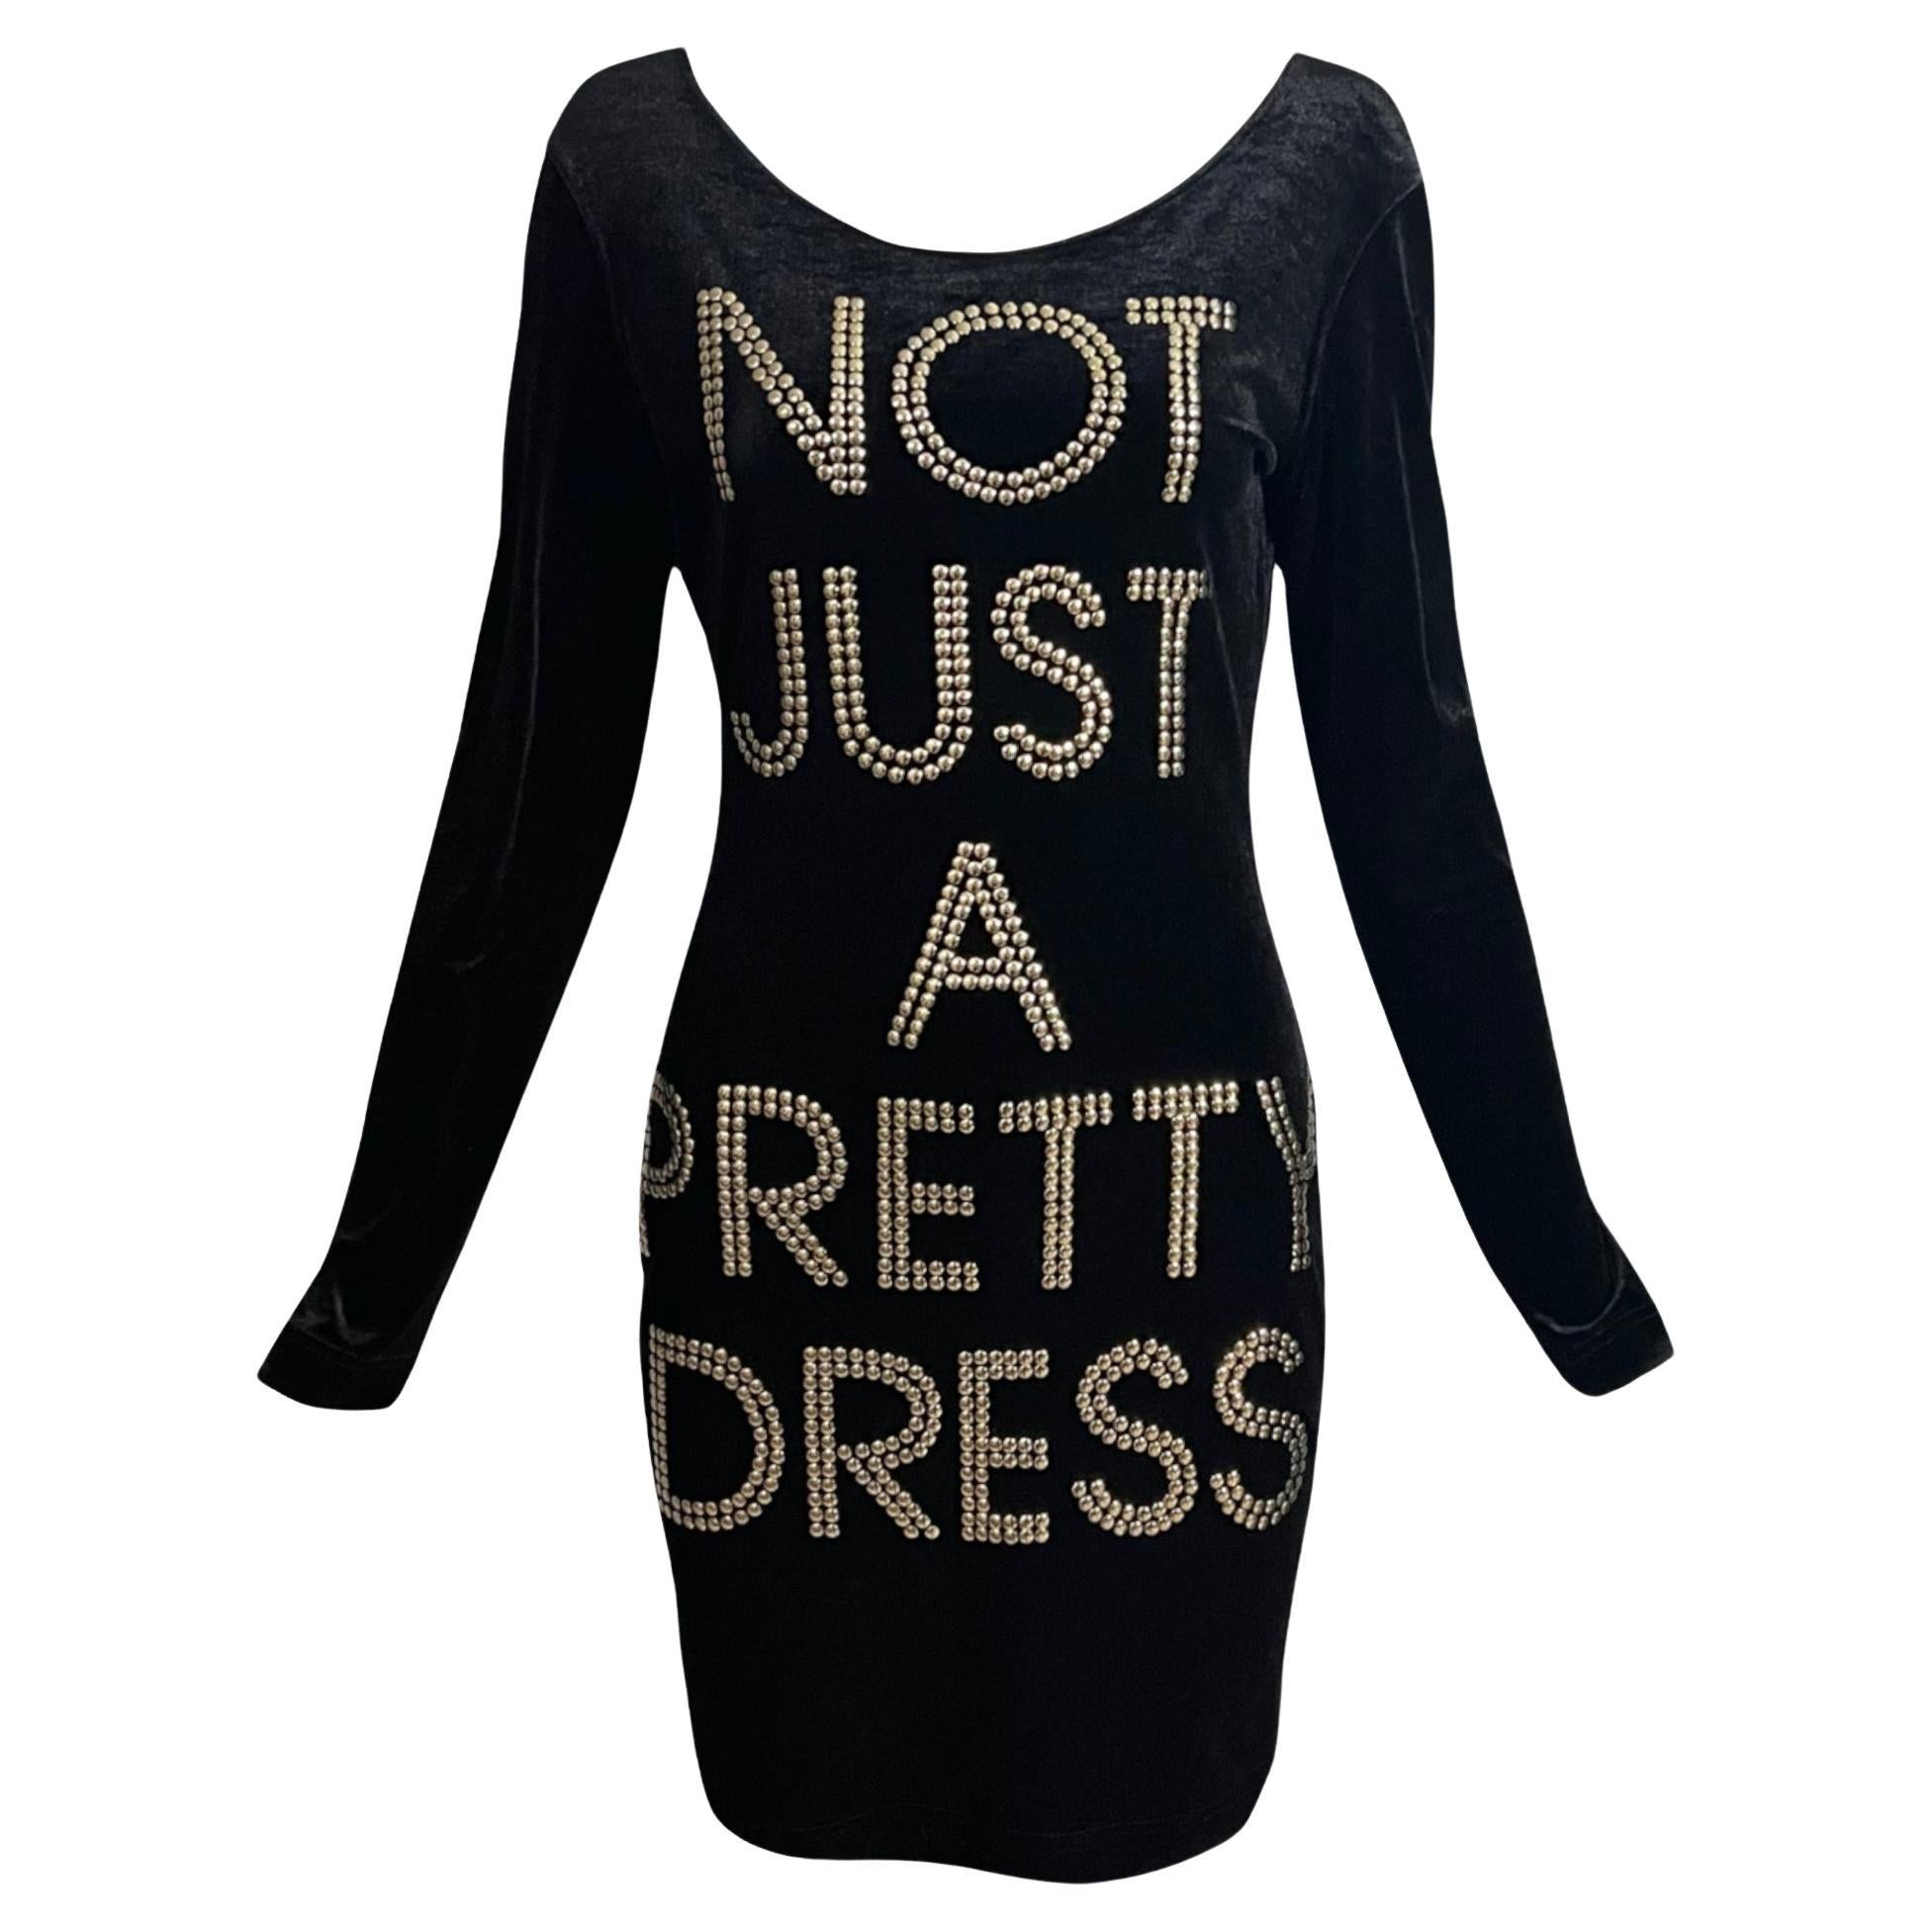 Robe cloutée Moschino Cheap & Chic « Not Just A Pretty Dress » des années 1990 en vente